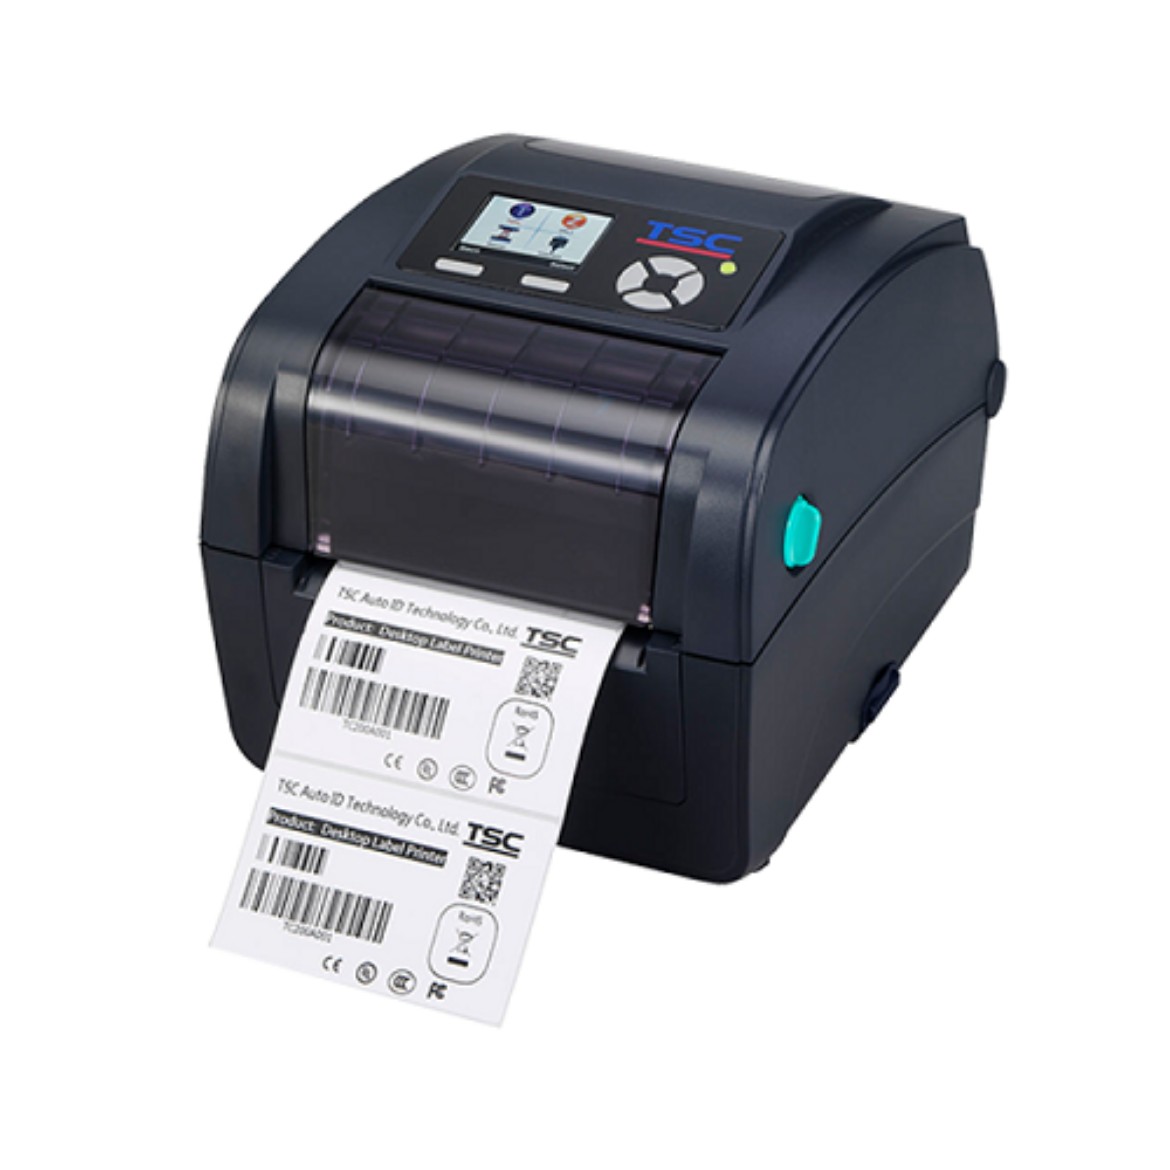 TSC TC200 impresora de etiquetas